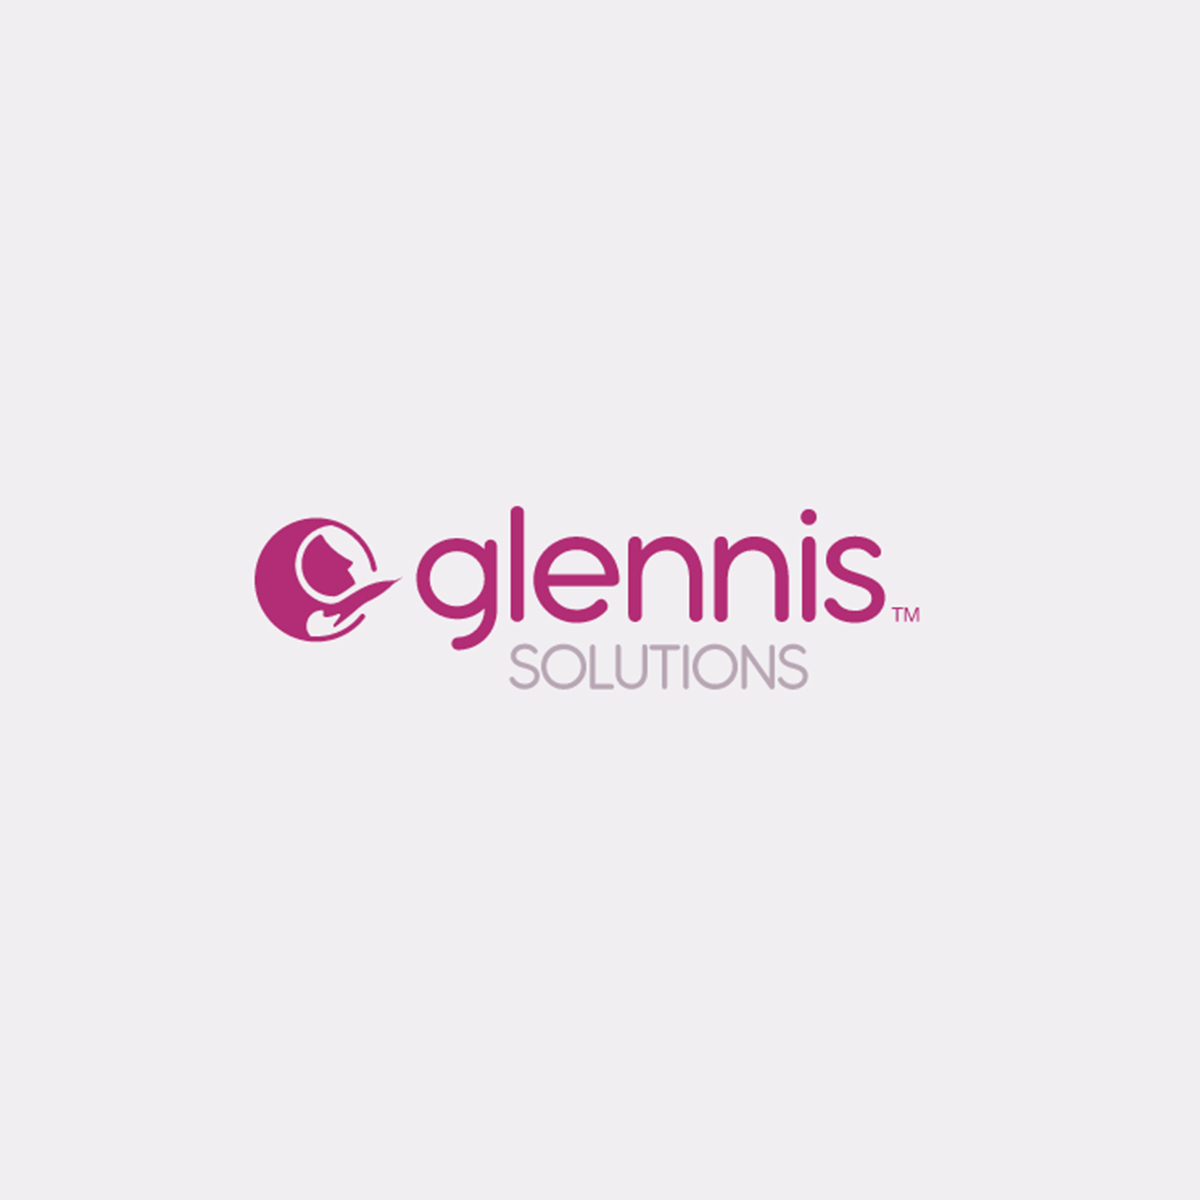 Glennis Solutions logo